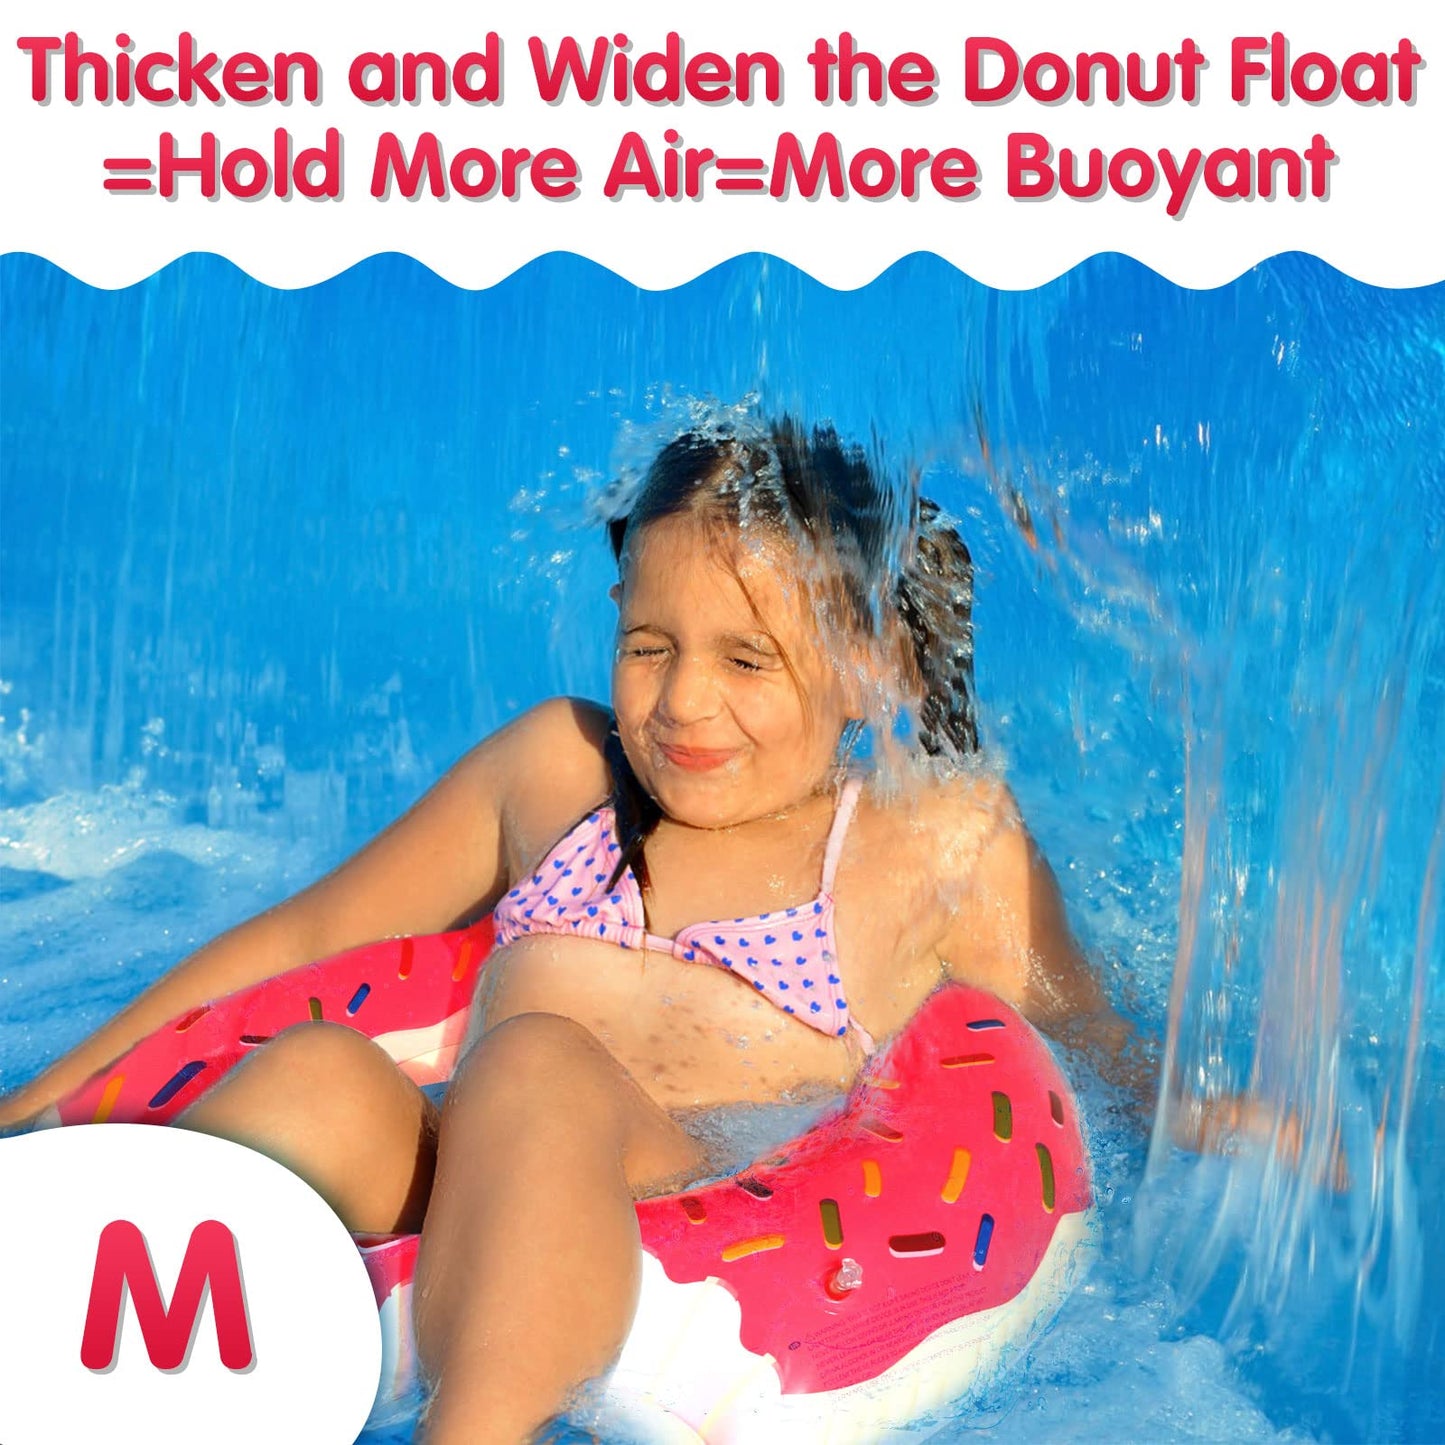 DMAR Donut Pool Floats Donut Pool Floatie Donut Tube Pool Doughnut Pool Float Donut Inflatables Doughnut Inner Tube Doughnut Pool Floatie Donut Pool Ring Donut Swimming Ring for Beach Pool #1 30in Strawberry Pink